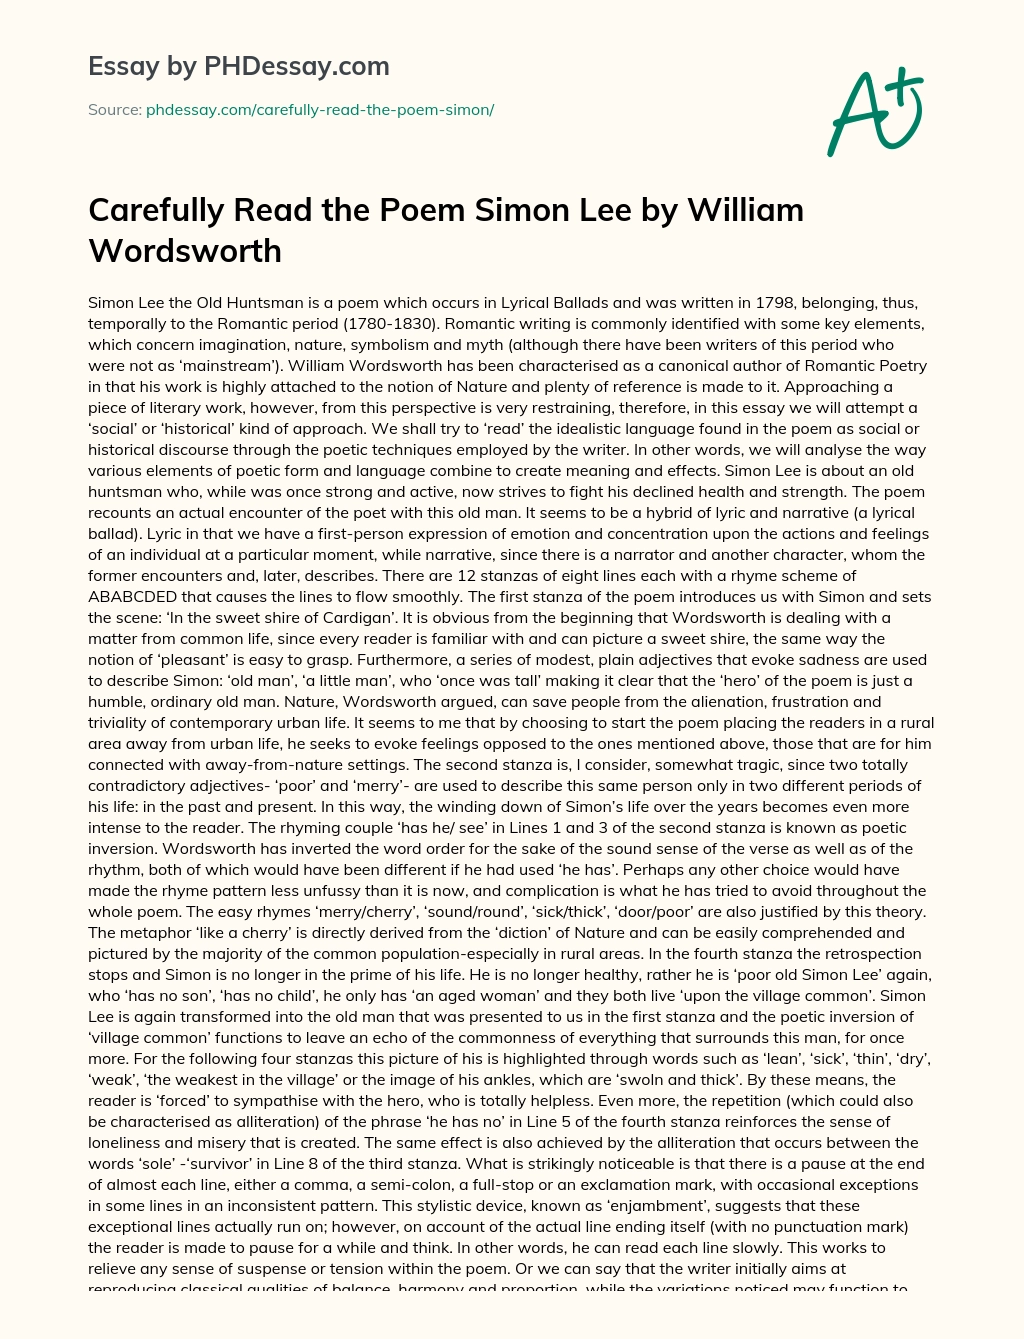 Carefully Read the Poem Simon Lee by William Wordsworth essay